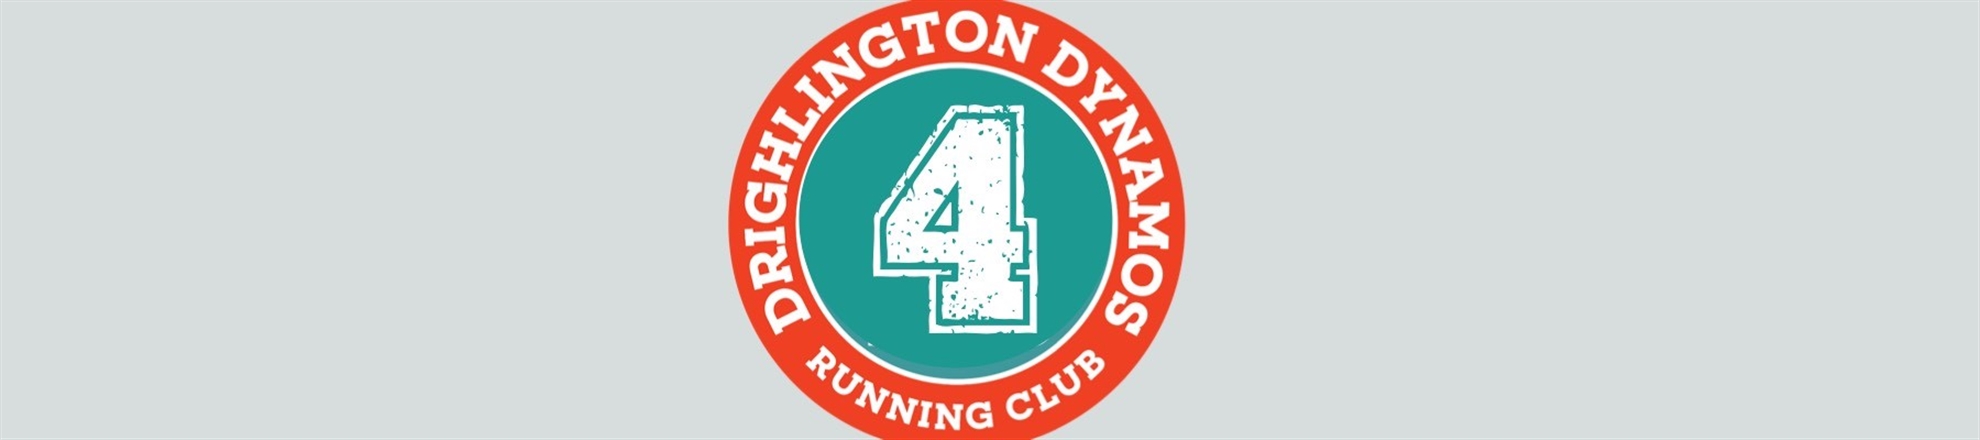 Drighlington Community Sports Club - Group 4